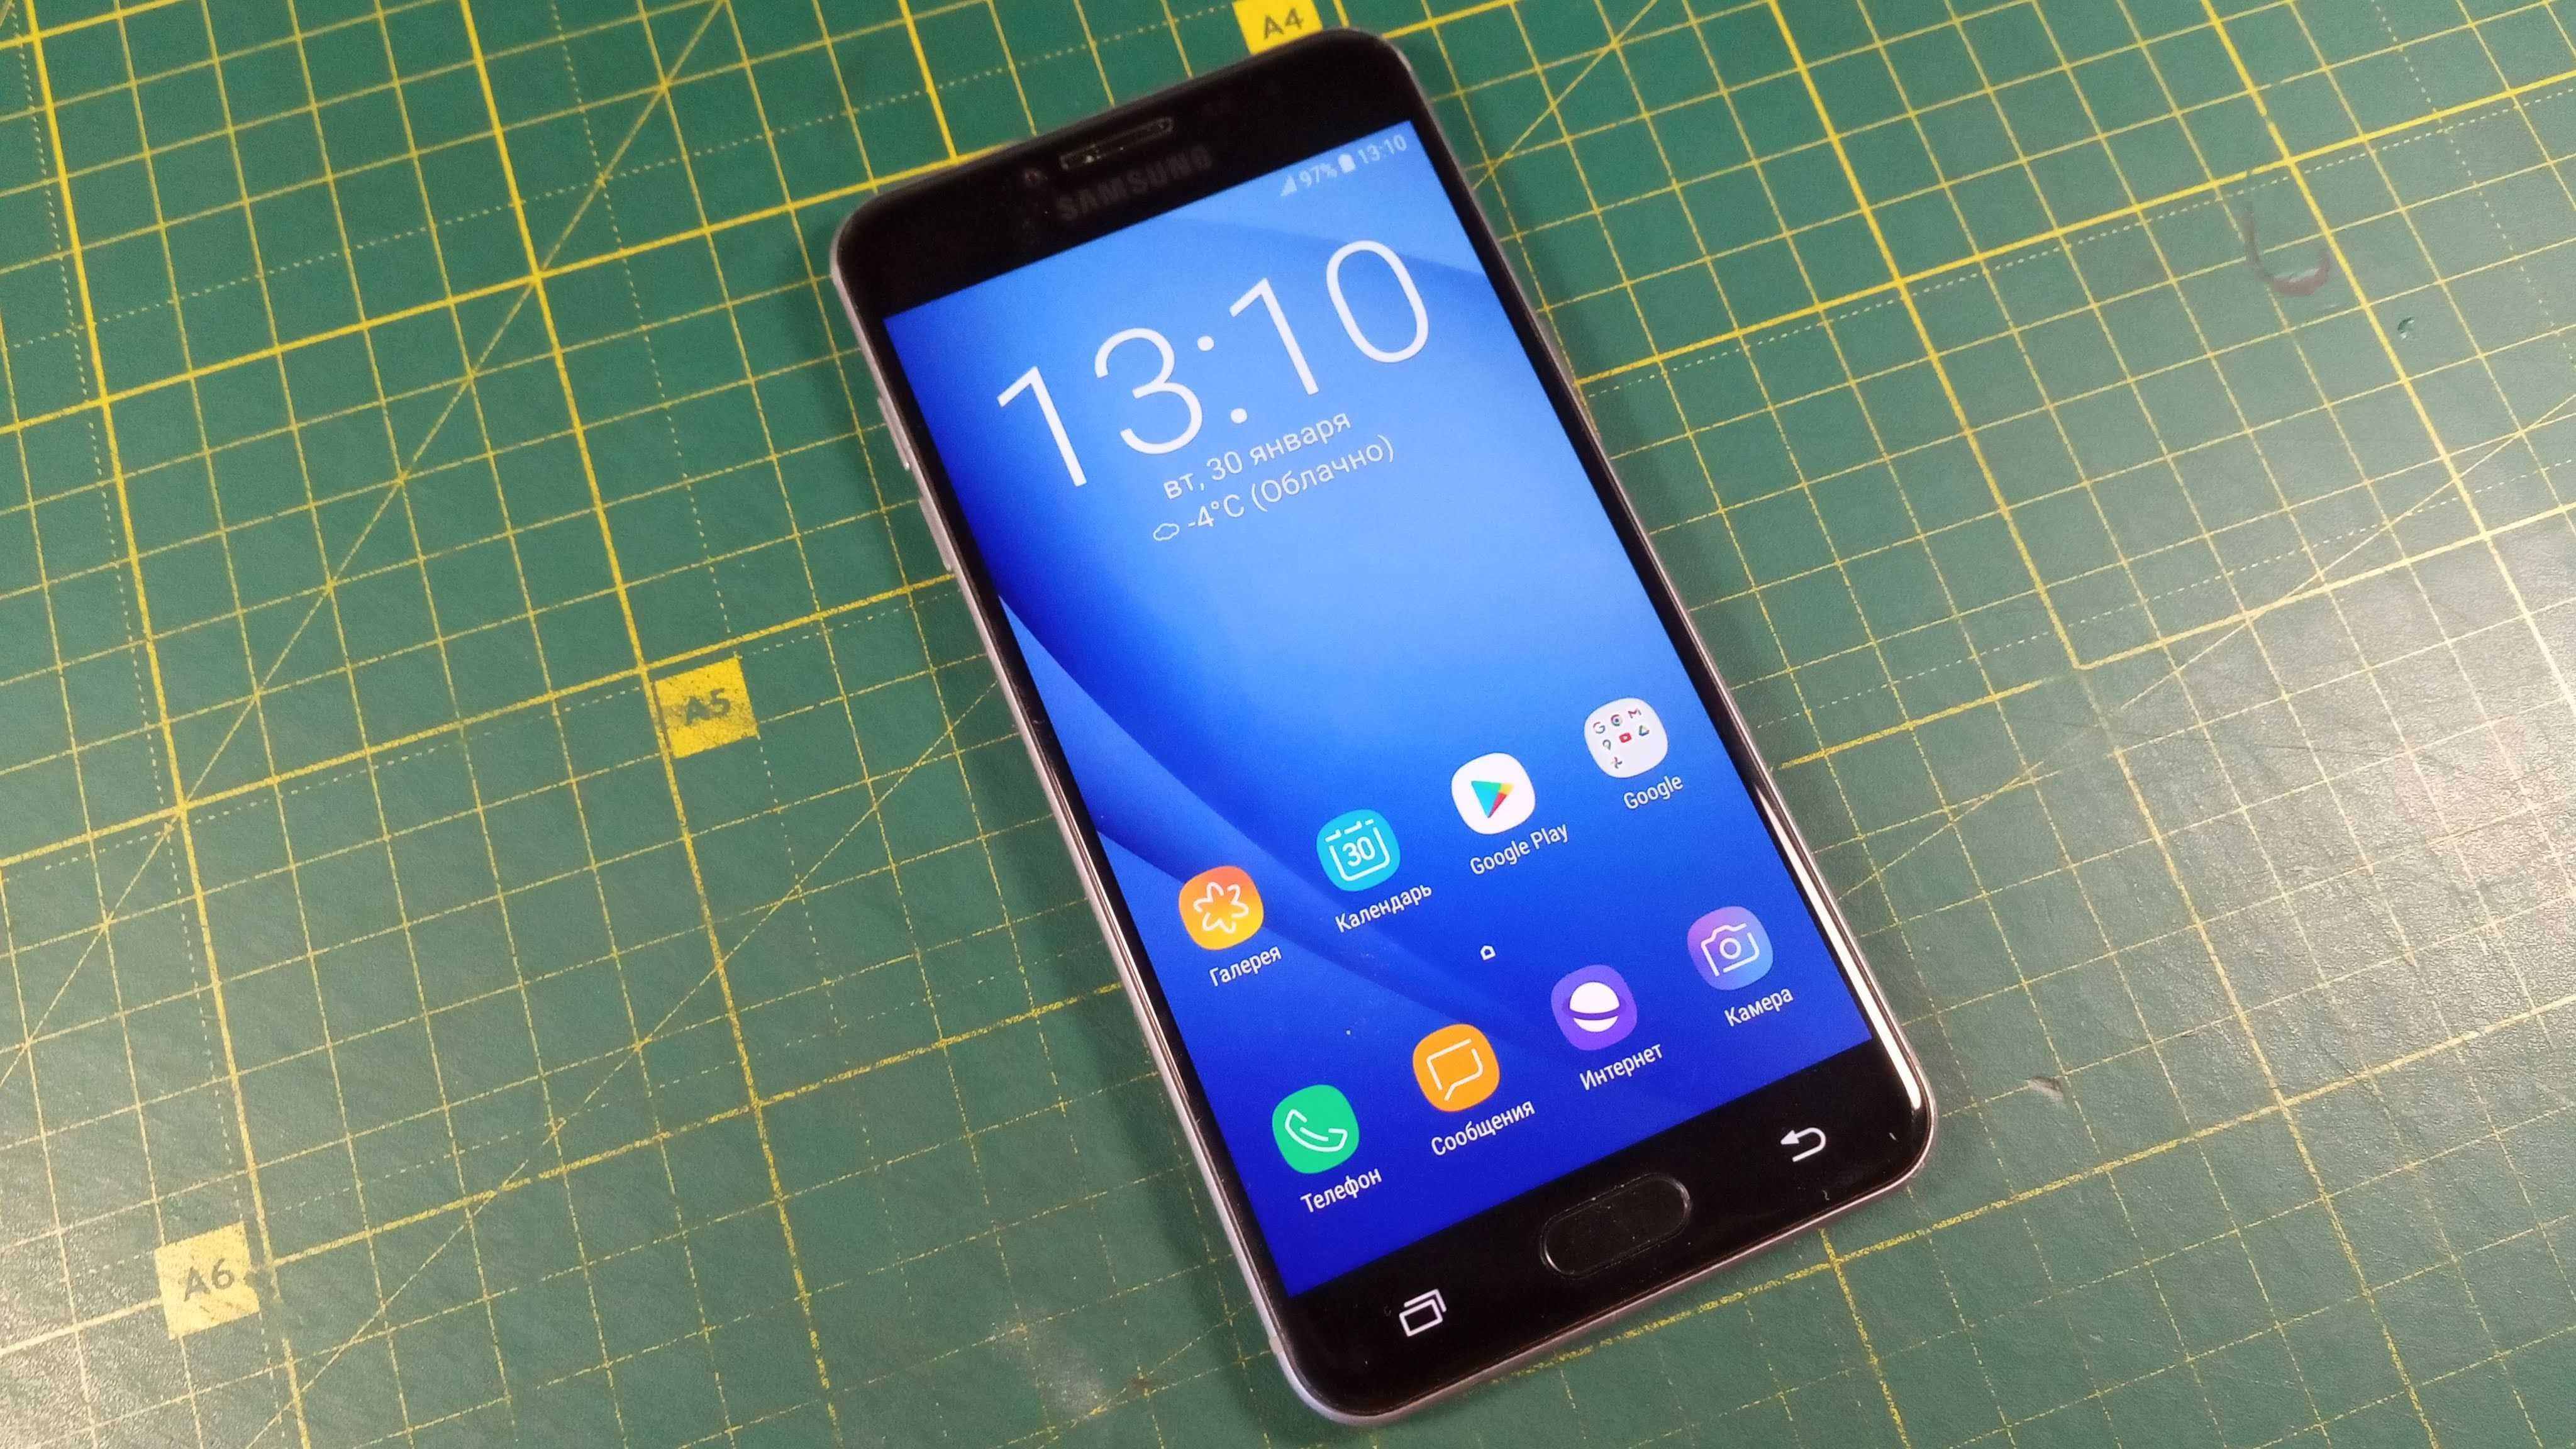 SAMSUNG Galaxy C5 SM-C5000, 4/32 Гб, NFC